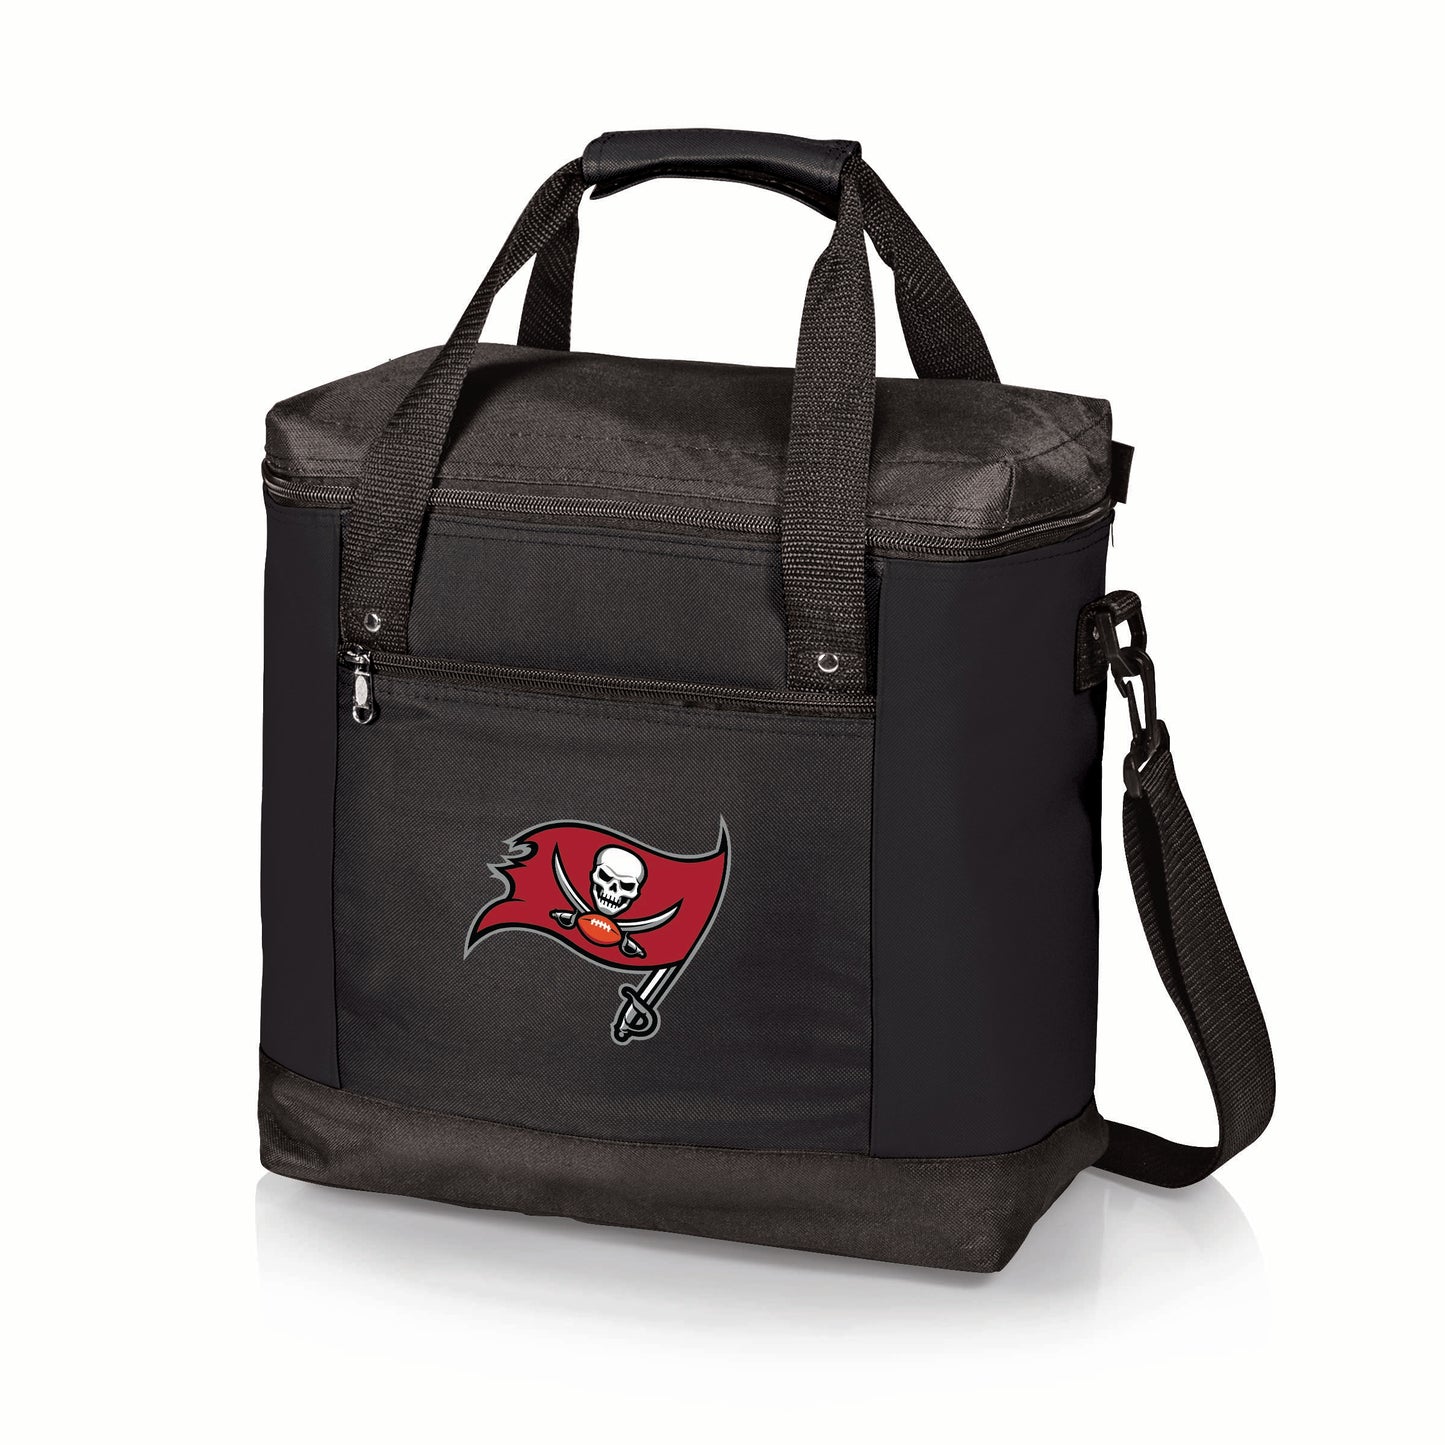 Tampa Bay Buccaneers - Montero Cooler Tote Bag